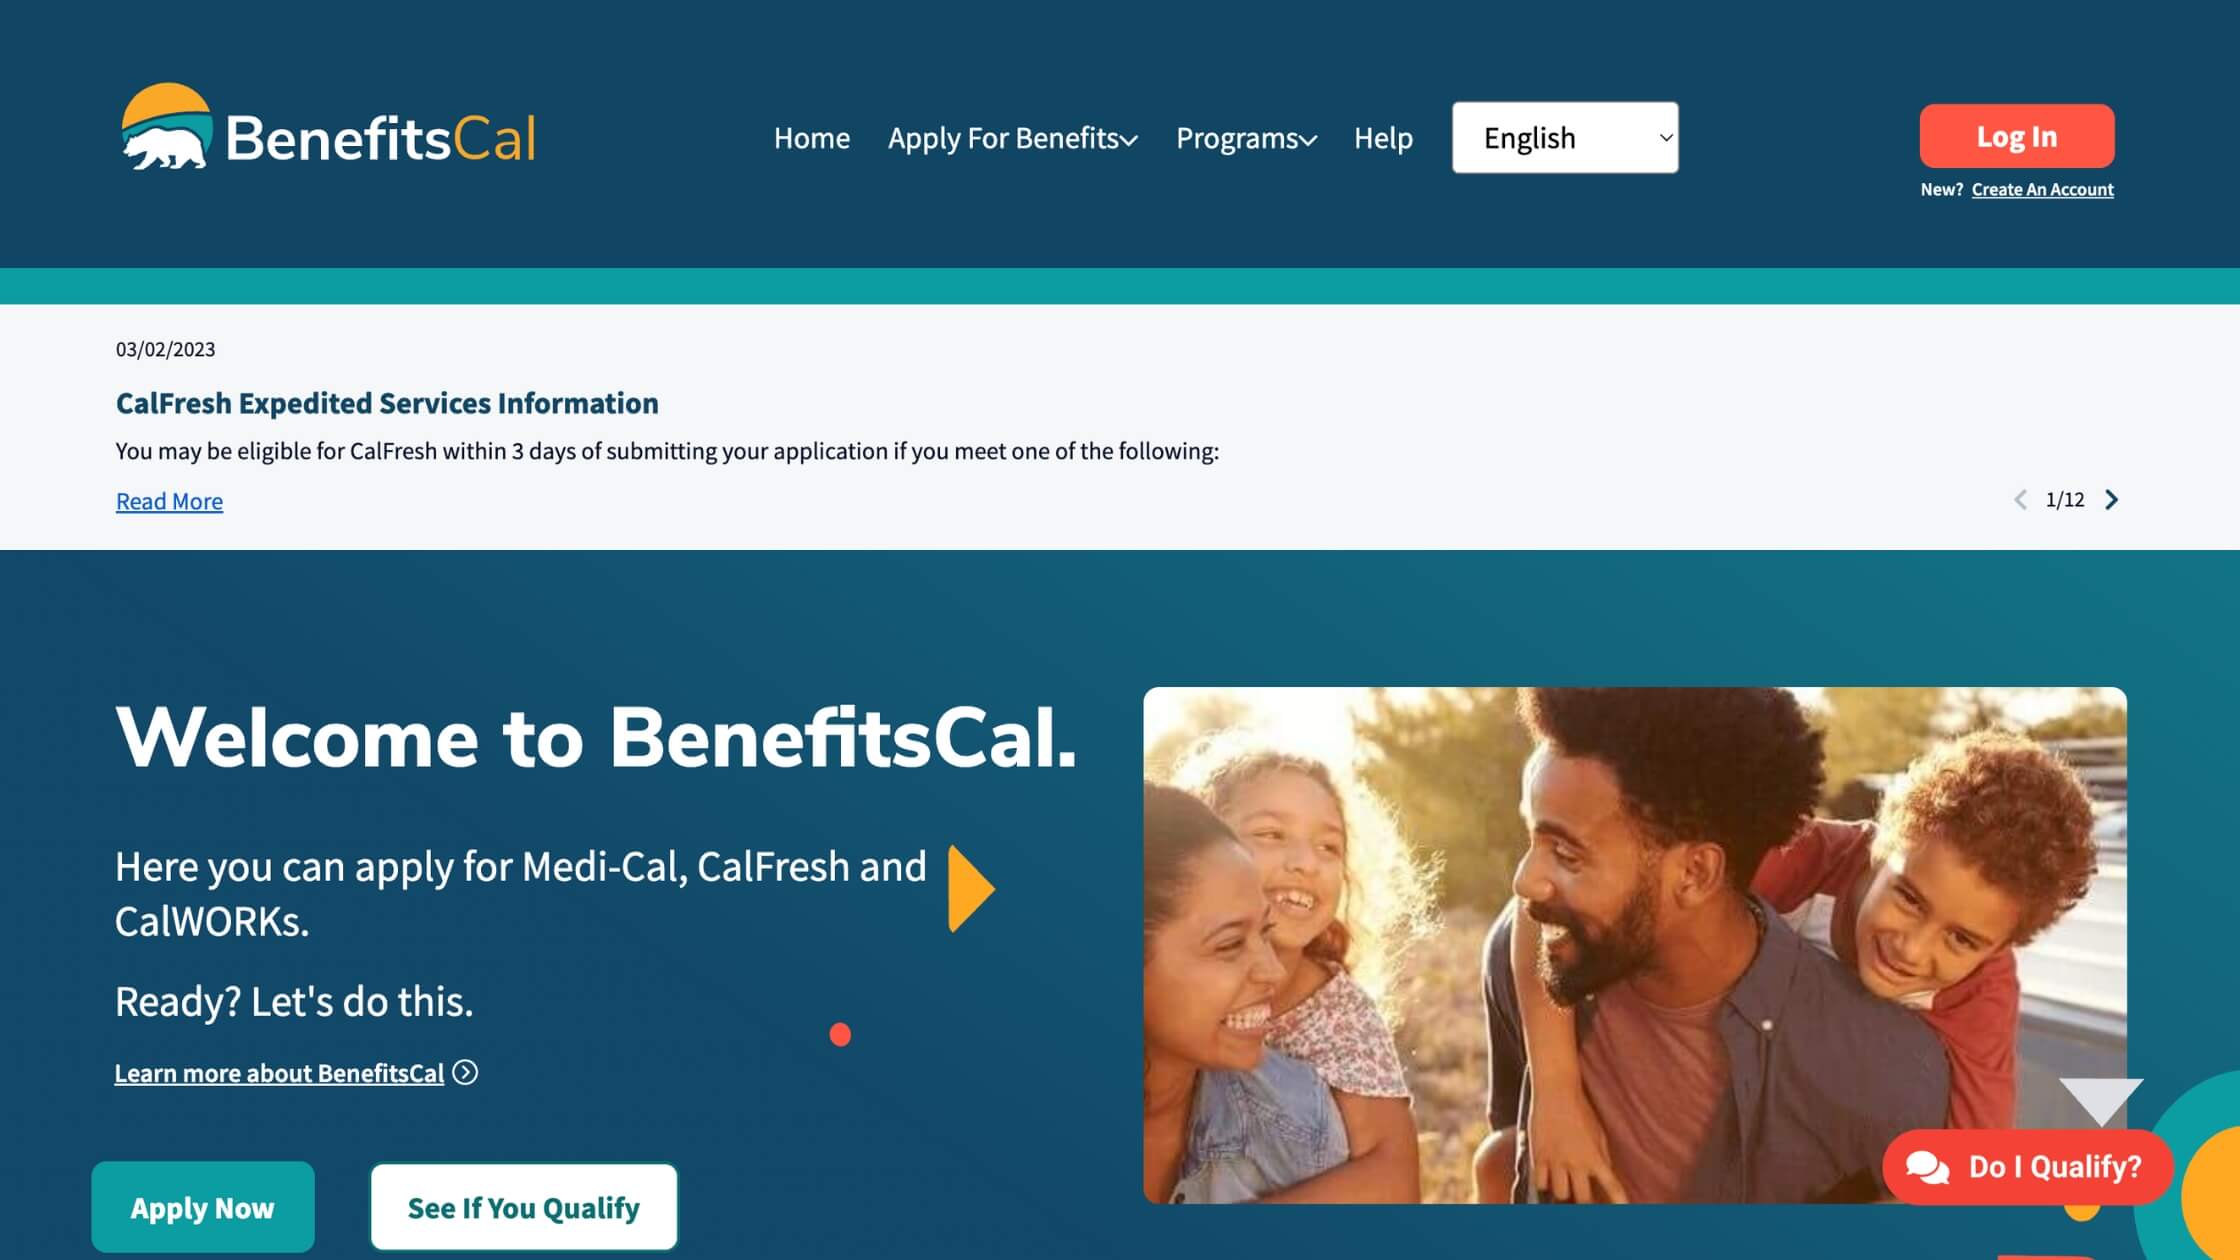 BenefitsCal - BenefitsCal Login at www.benefitscal.com